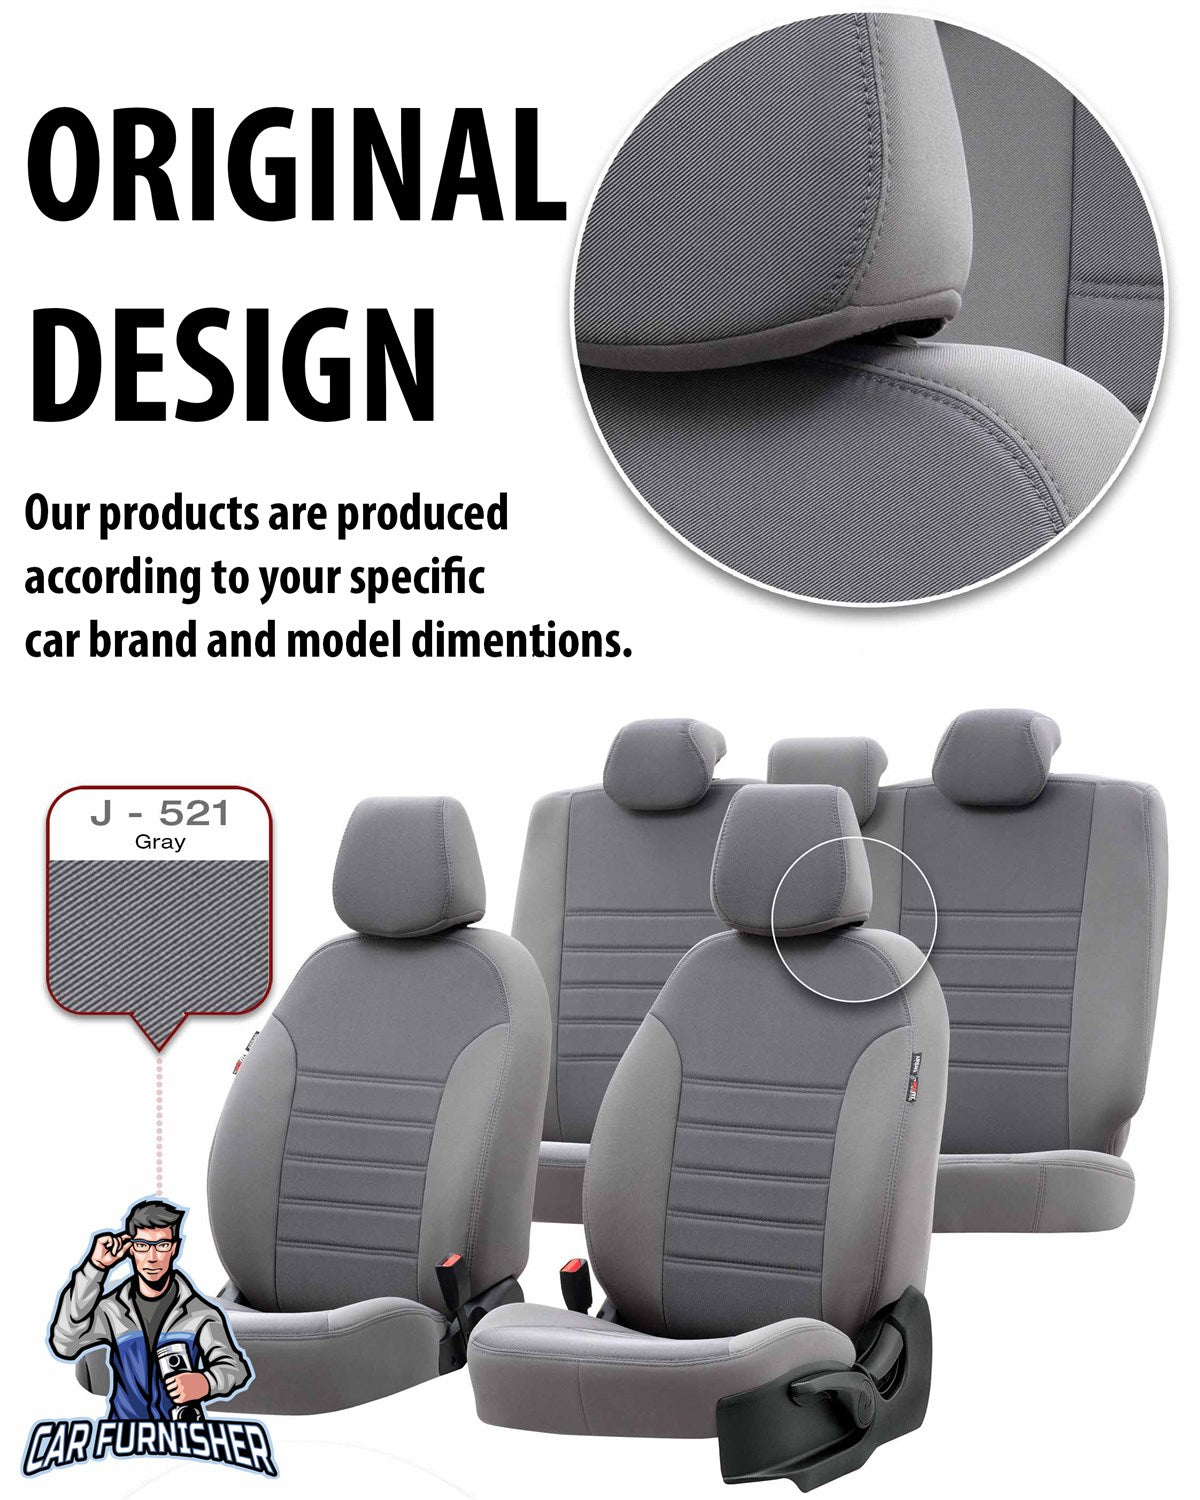 Landrover Freelander Car Seat Covers 1998-2012 Original Design Dark Gray Jacquard Fabric